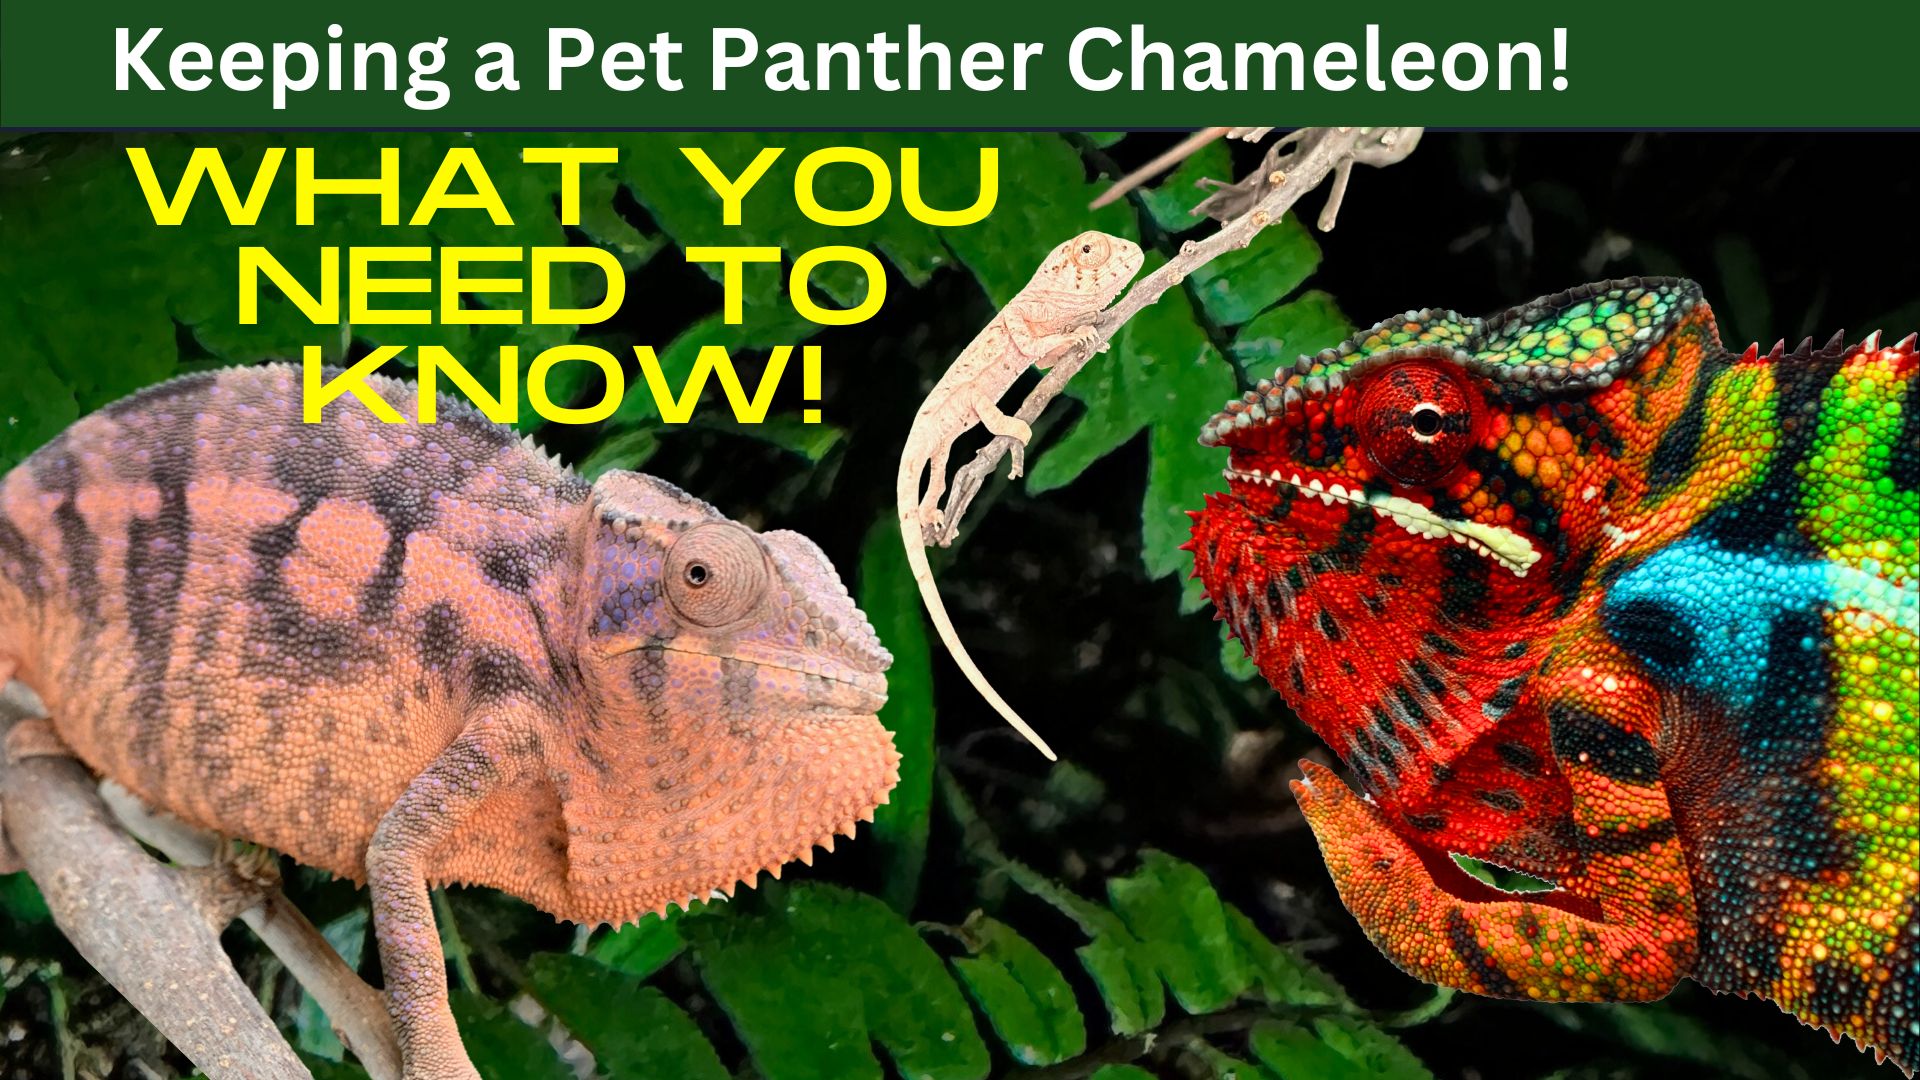 Panther Chameleon Care Sheet